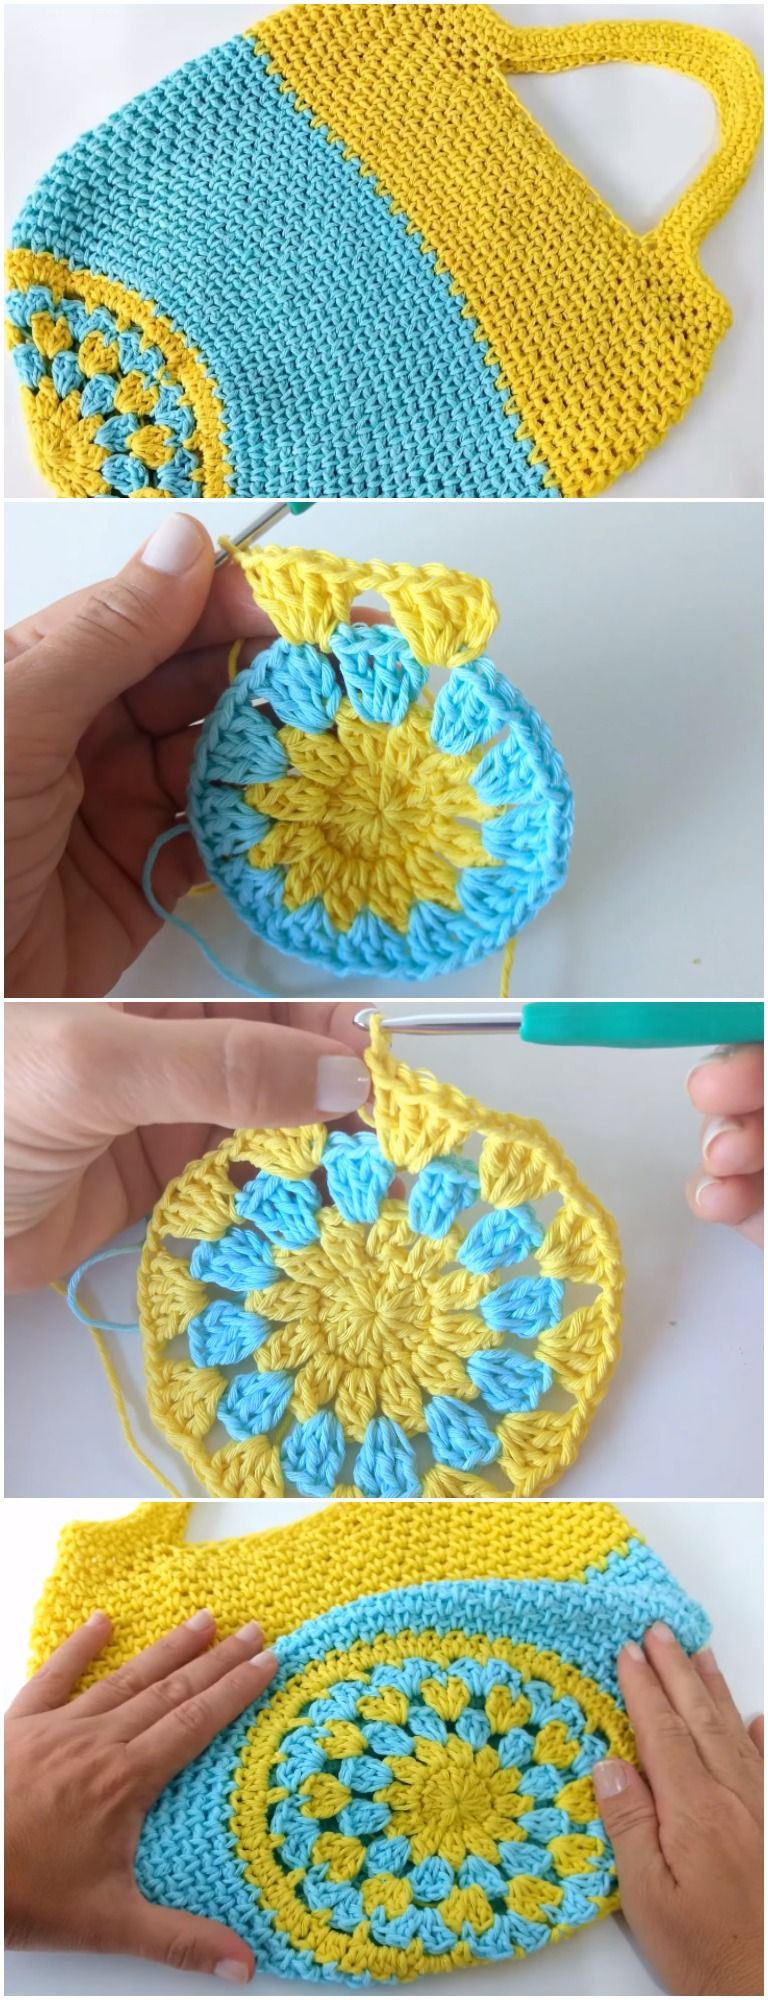 Crochet Beautiful Market Bag Free Pattern [Video]